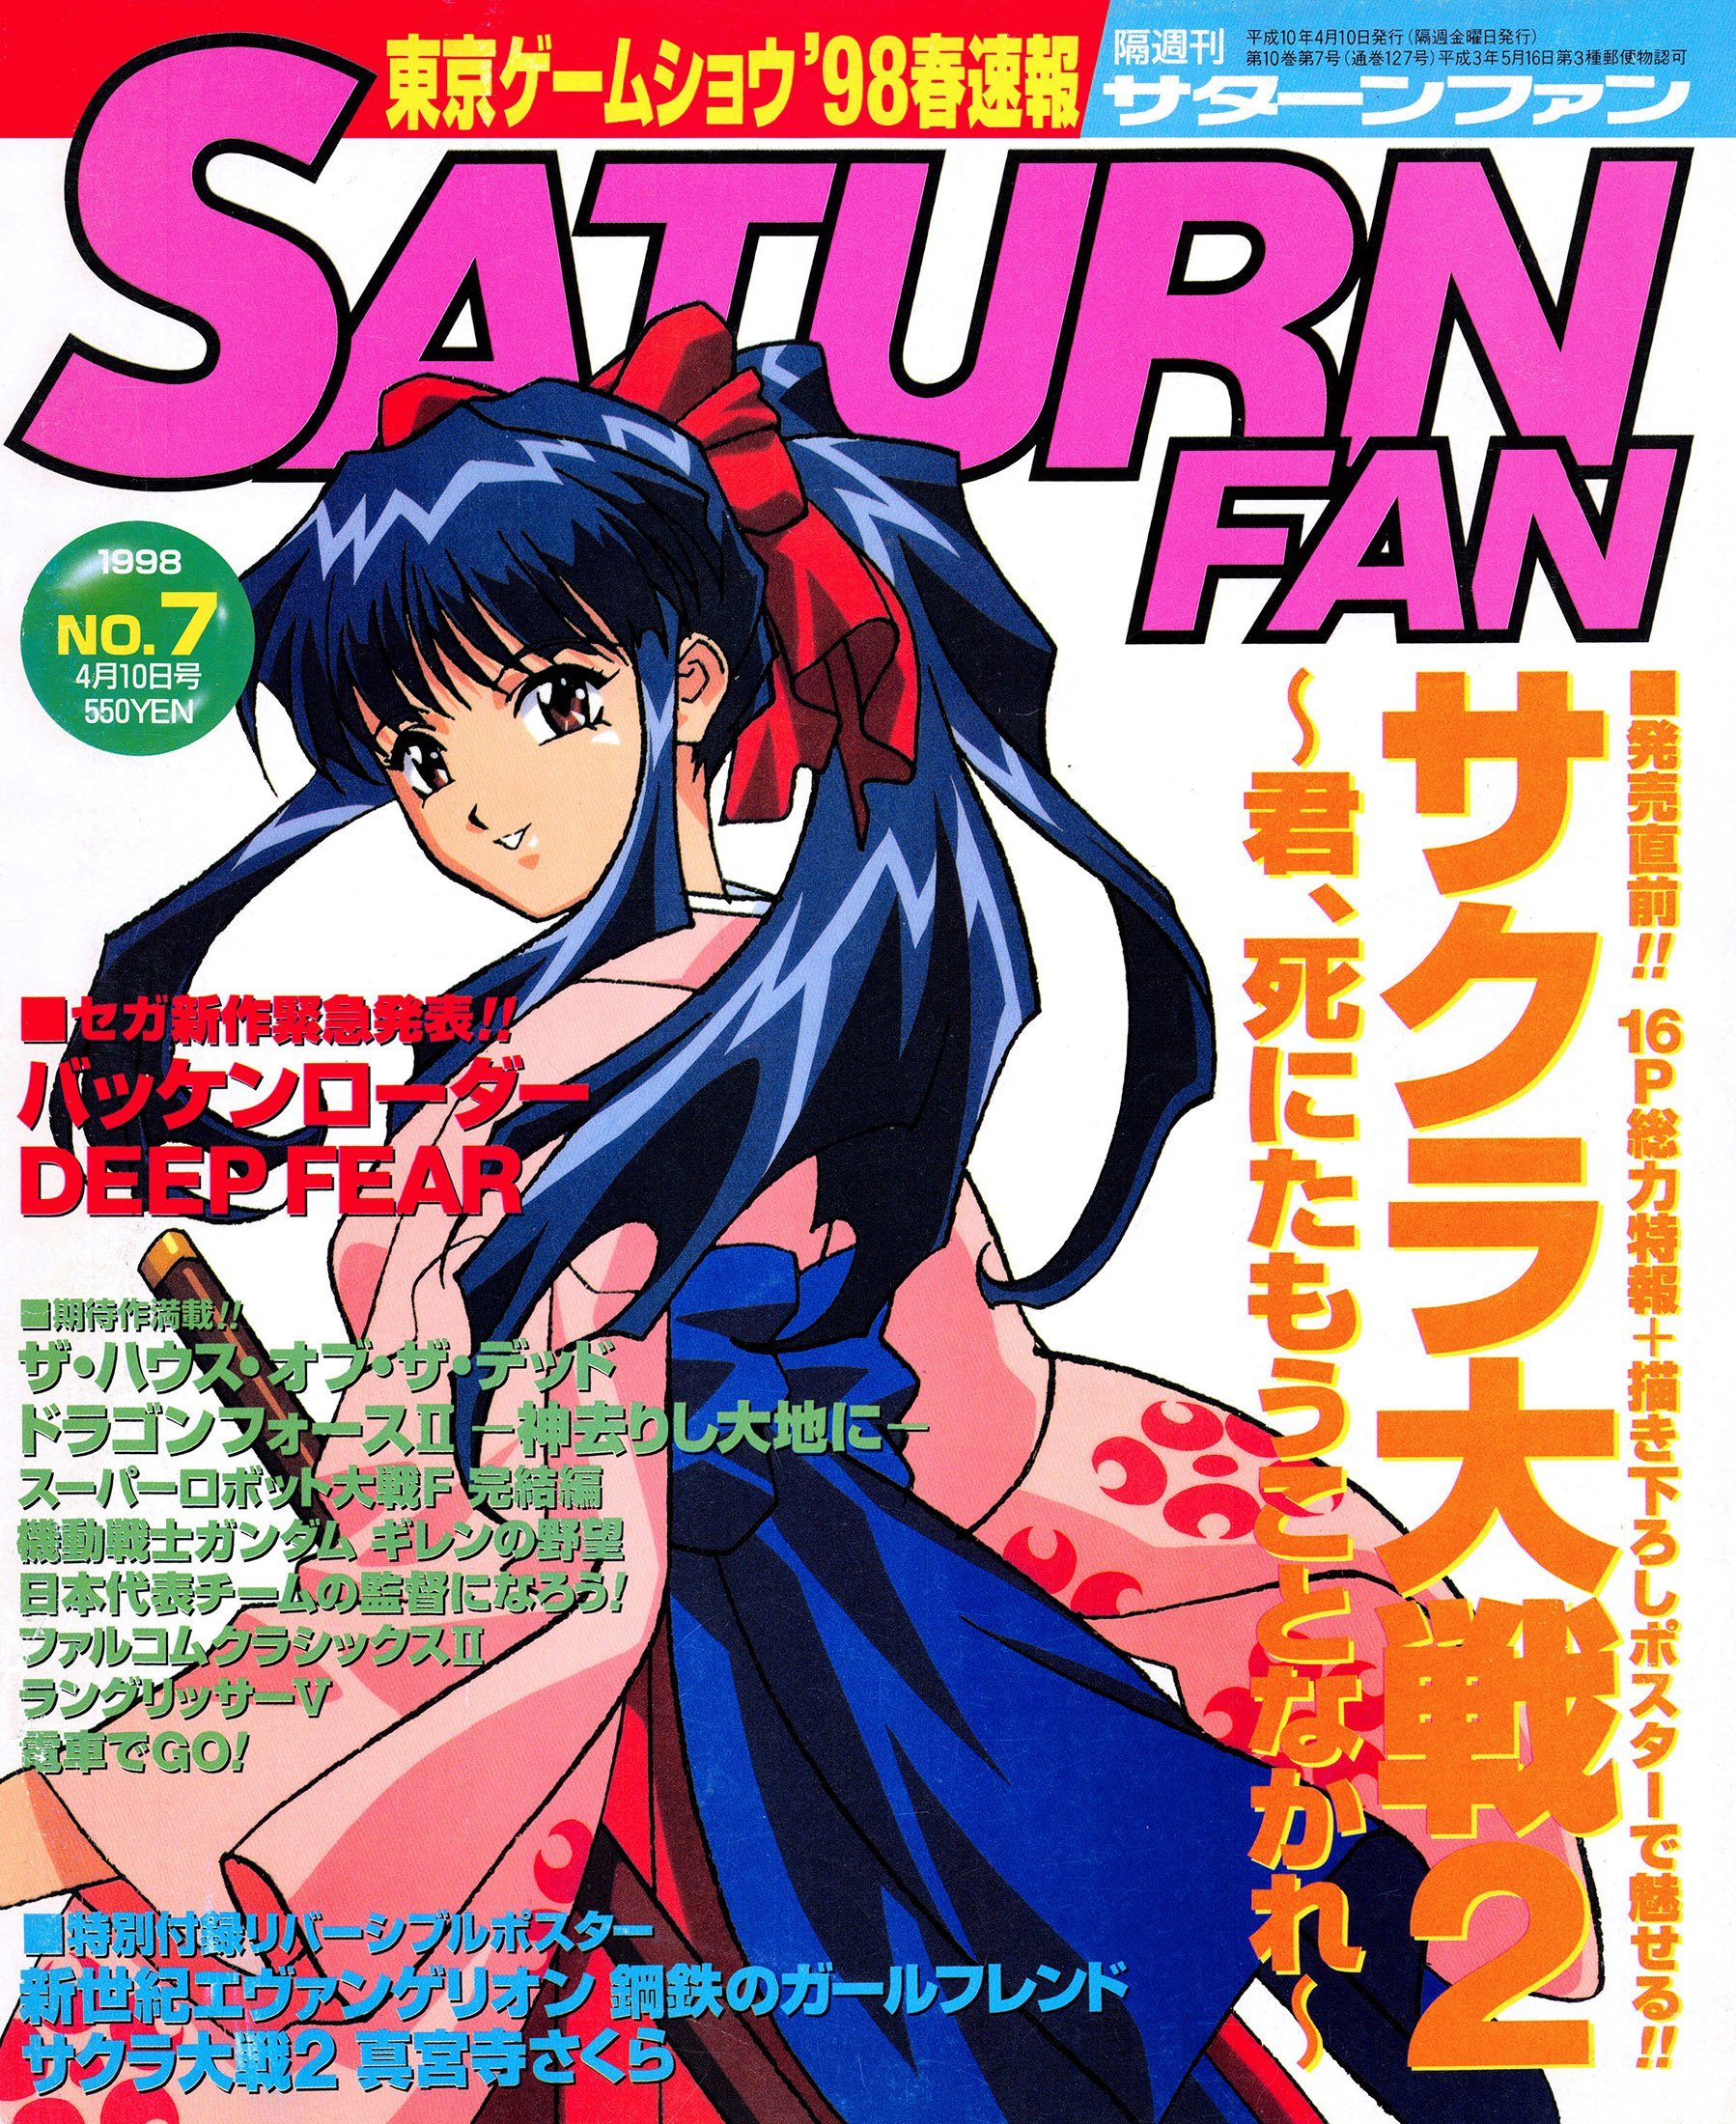 Saturn Fan issue 068 (April 10, 1998)